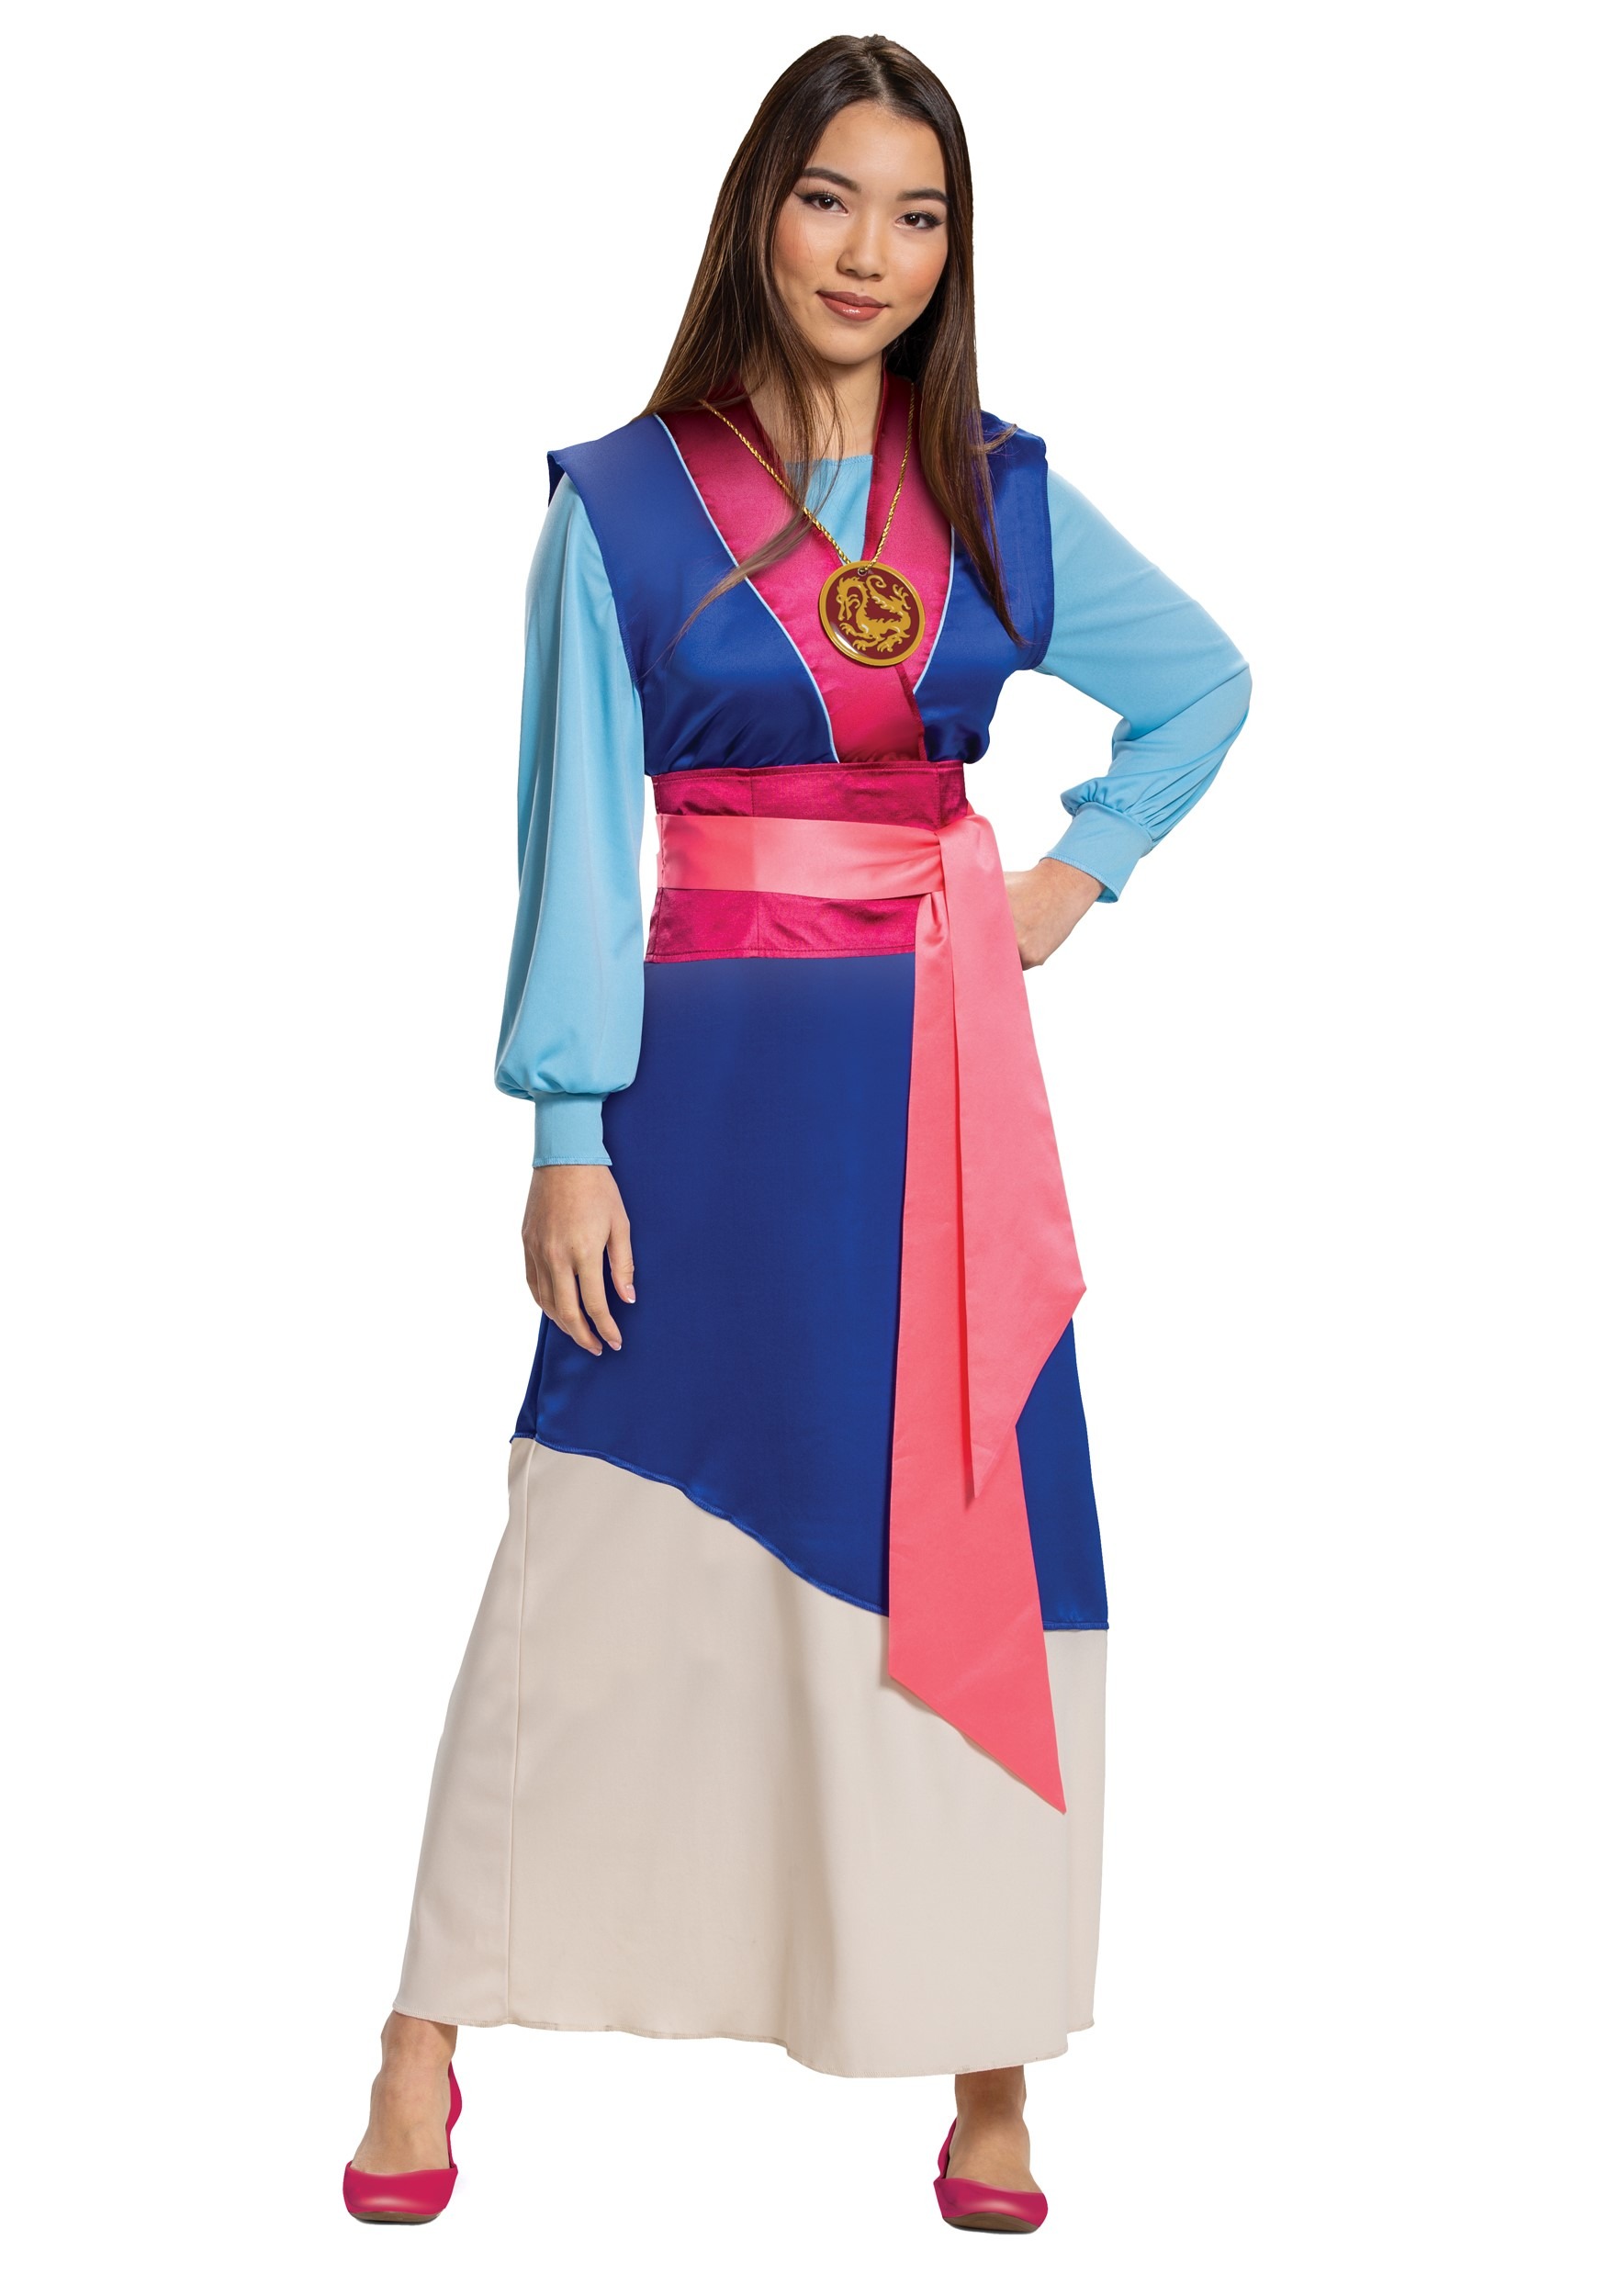 Mulan Blue Dress Fancy Dress Costume For Women